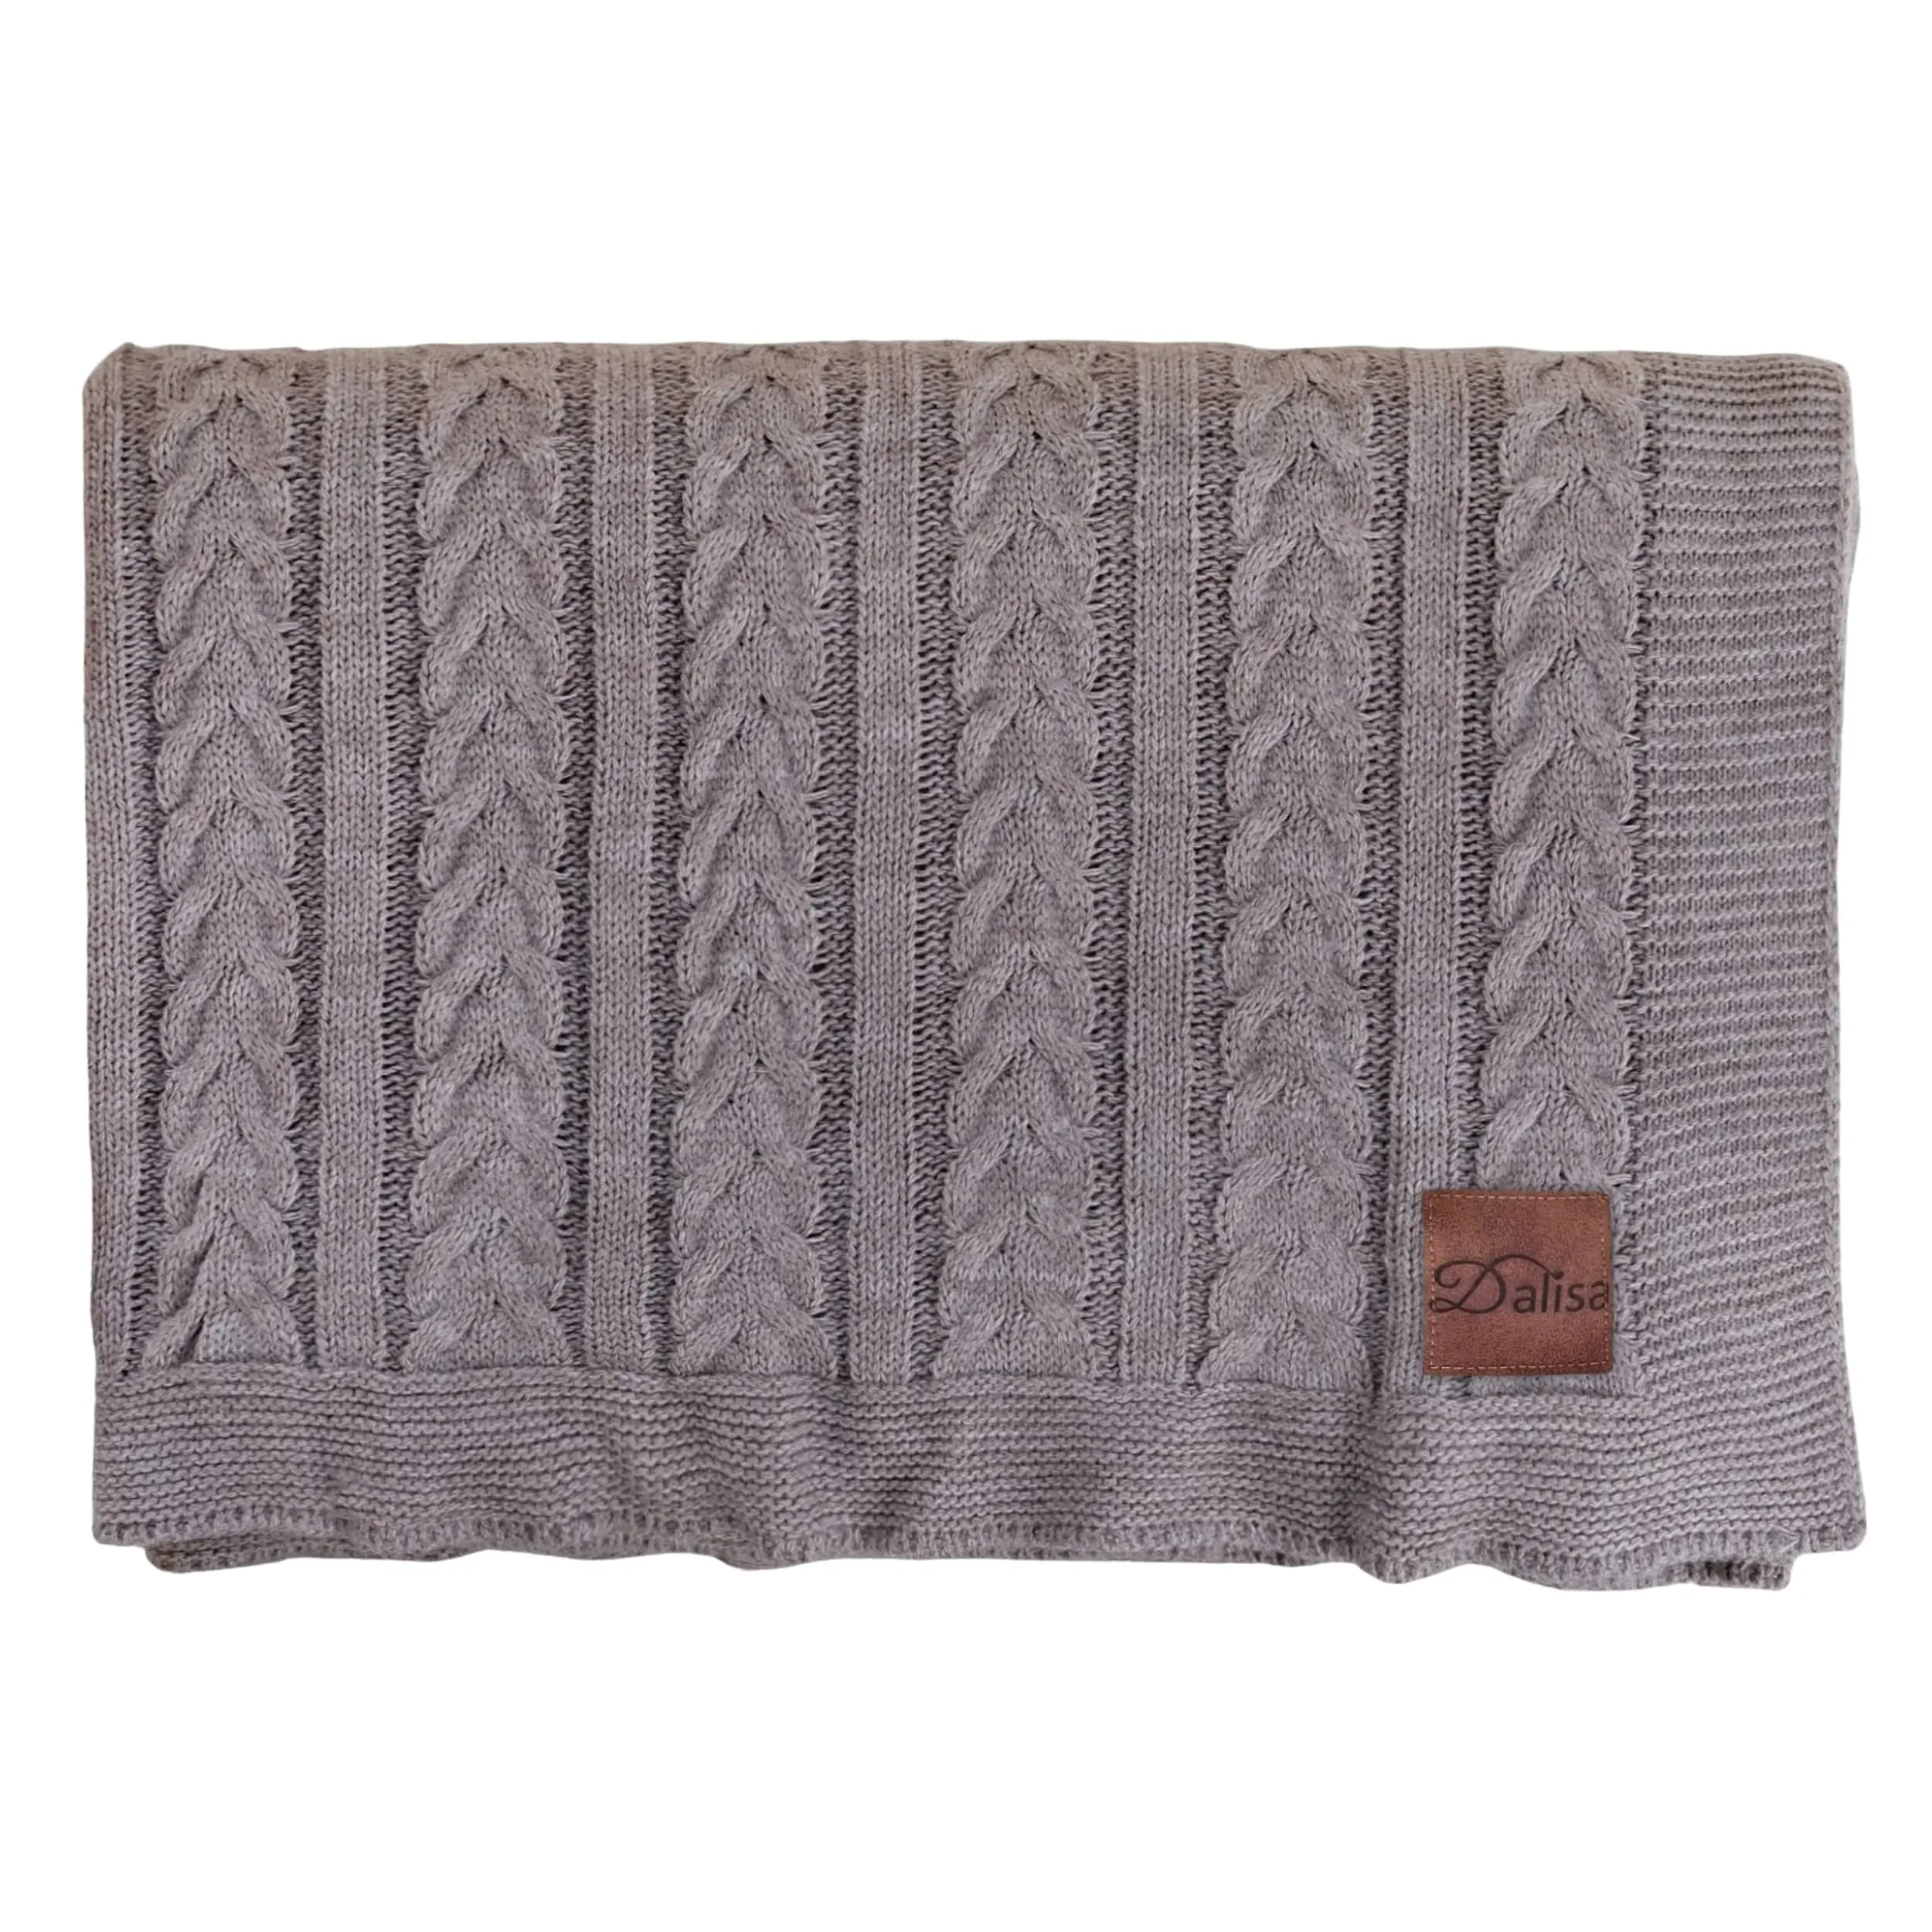 Cotton Blanket 200*220 Cm Beige Blanket Knitted 100% Acrylic MATHILDA Blanket High Quality Home Tekstile